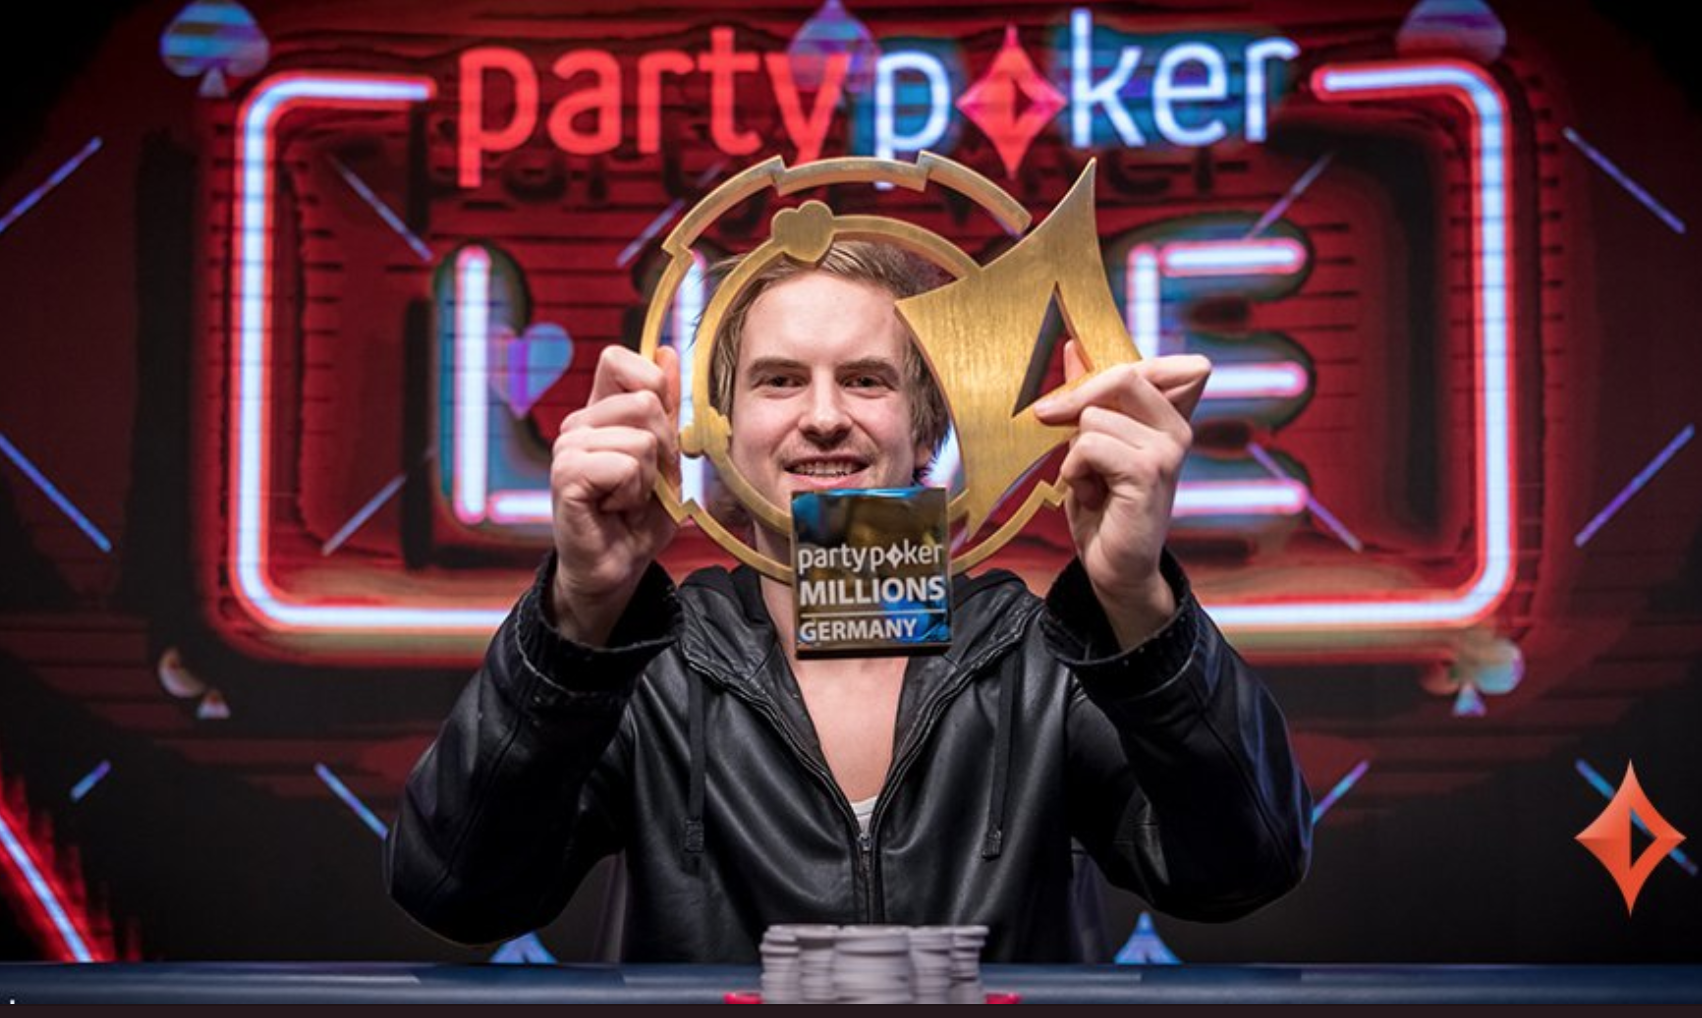 Online Poker Legend Viktor Blom Takes Home a Million with Partypoker LIVE Main Event Score